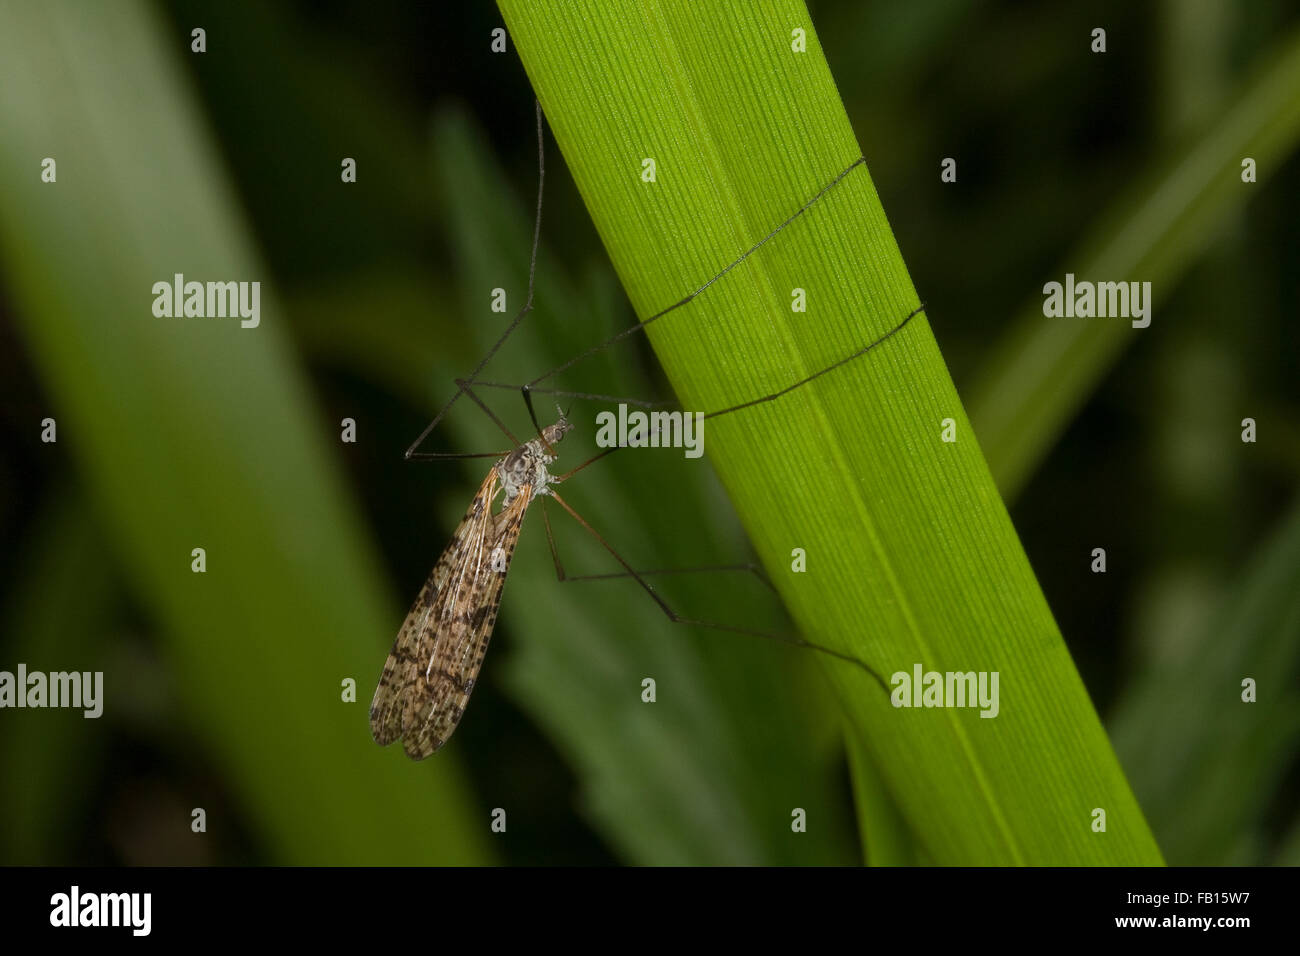 Short-palped cranefly, Stelzmücke, Sumpfmücke, Limnophila spec., Stelzmücken, Sumpfmücken, Limoniidae, short-palped craneflies Stock Photo